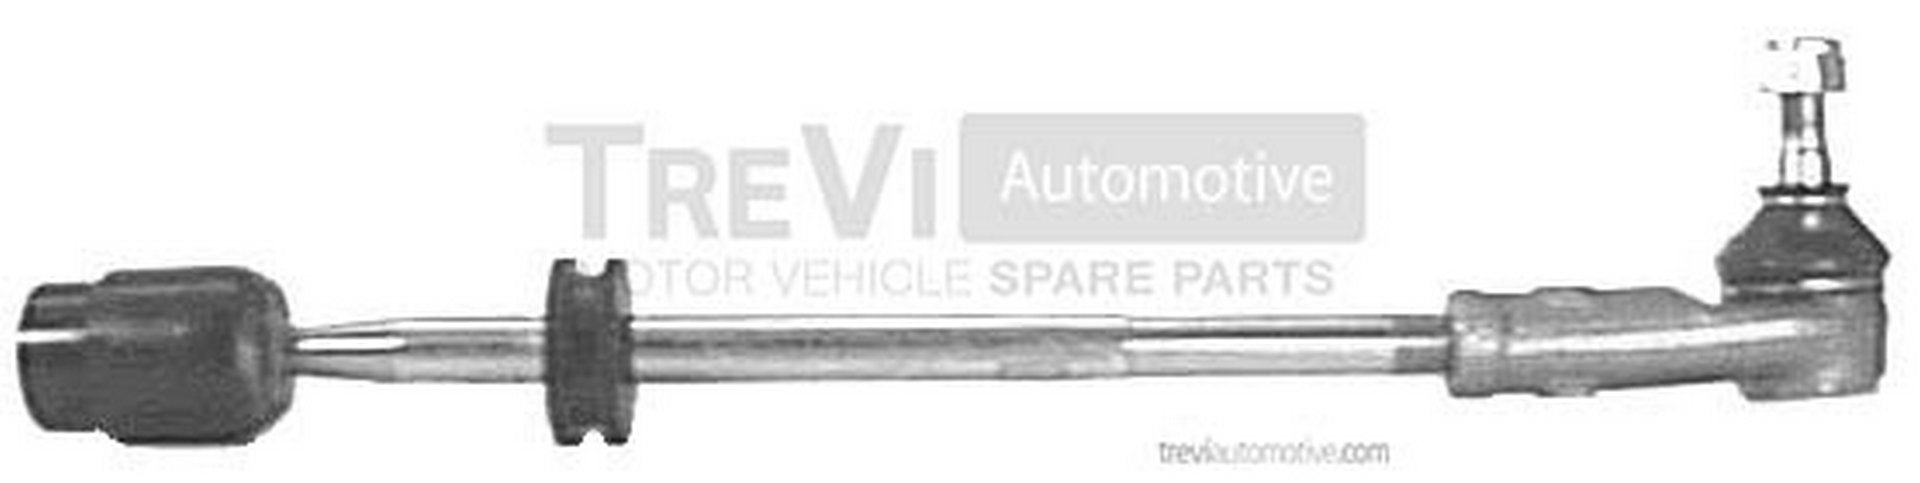 TREVI AUTOMOTIVE TRTT5503